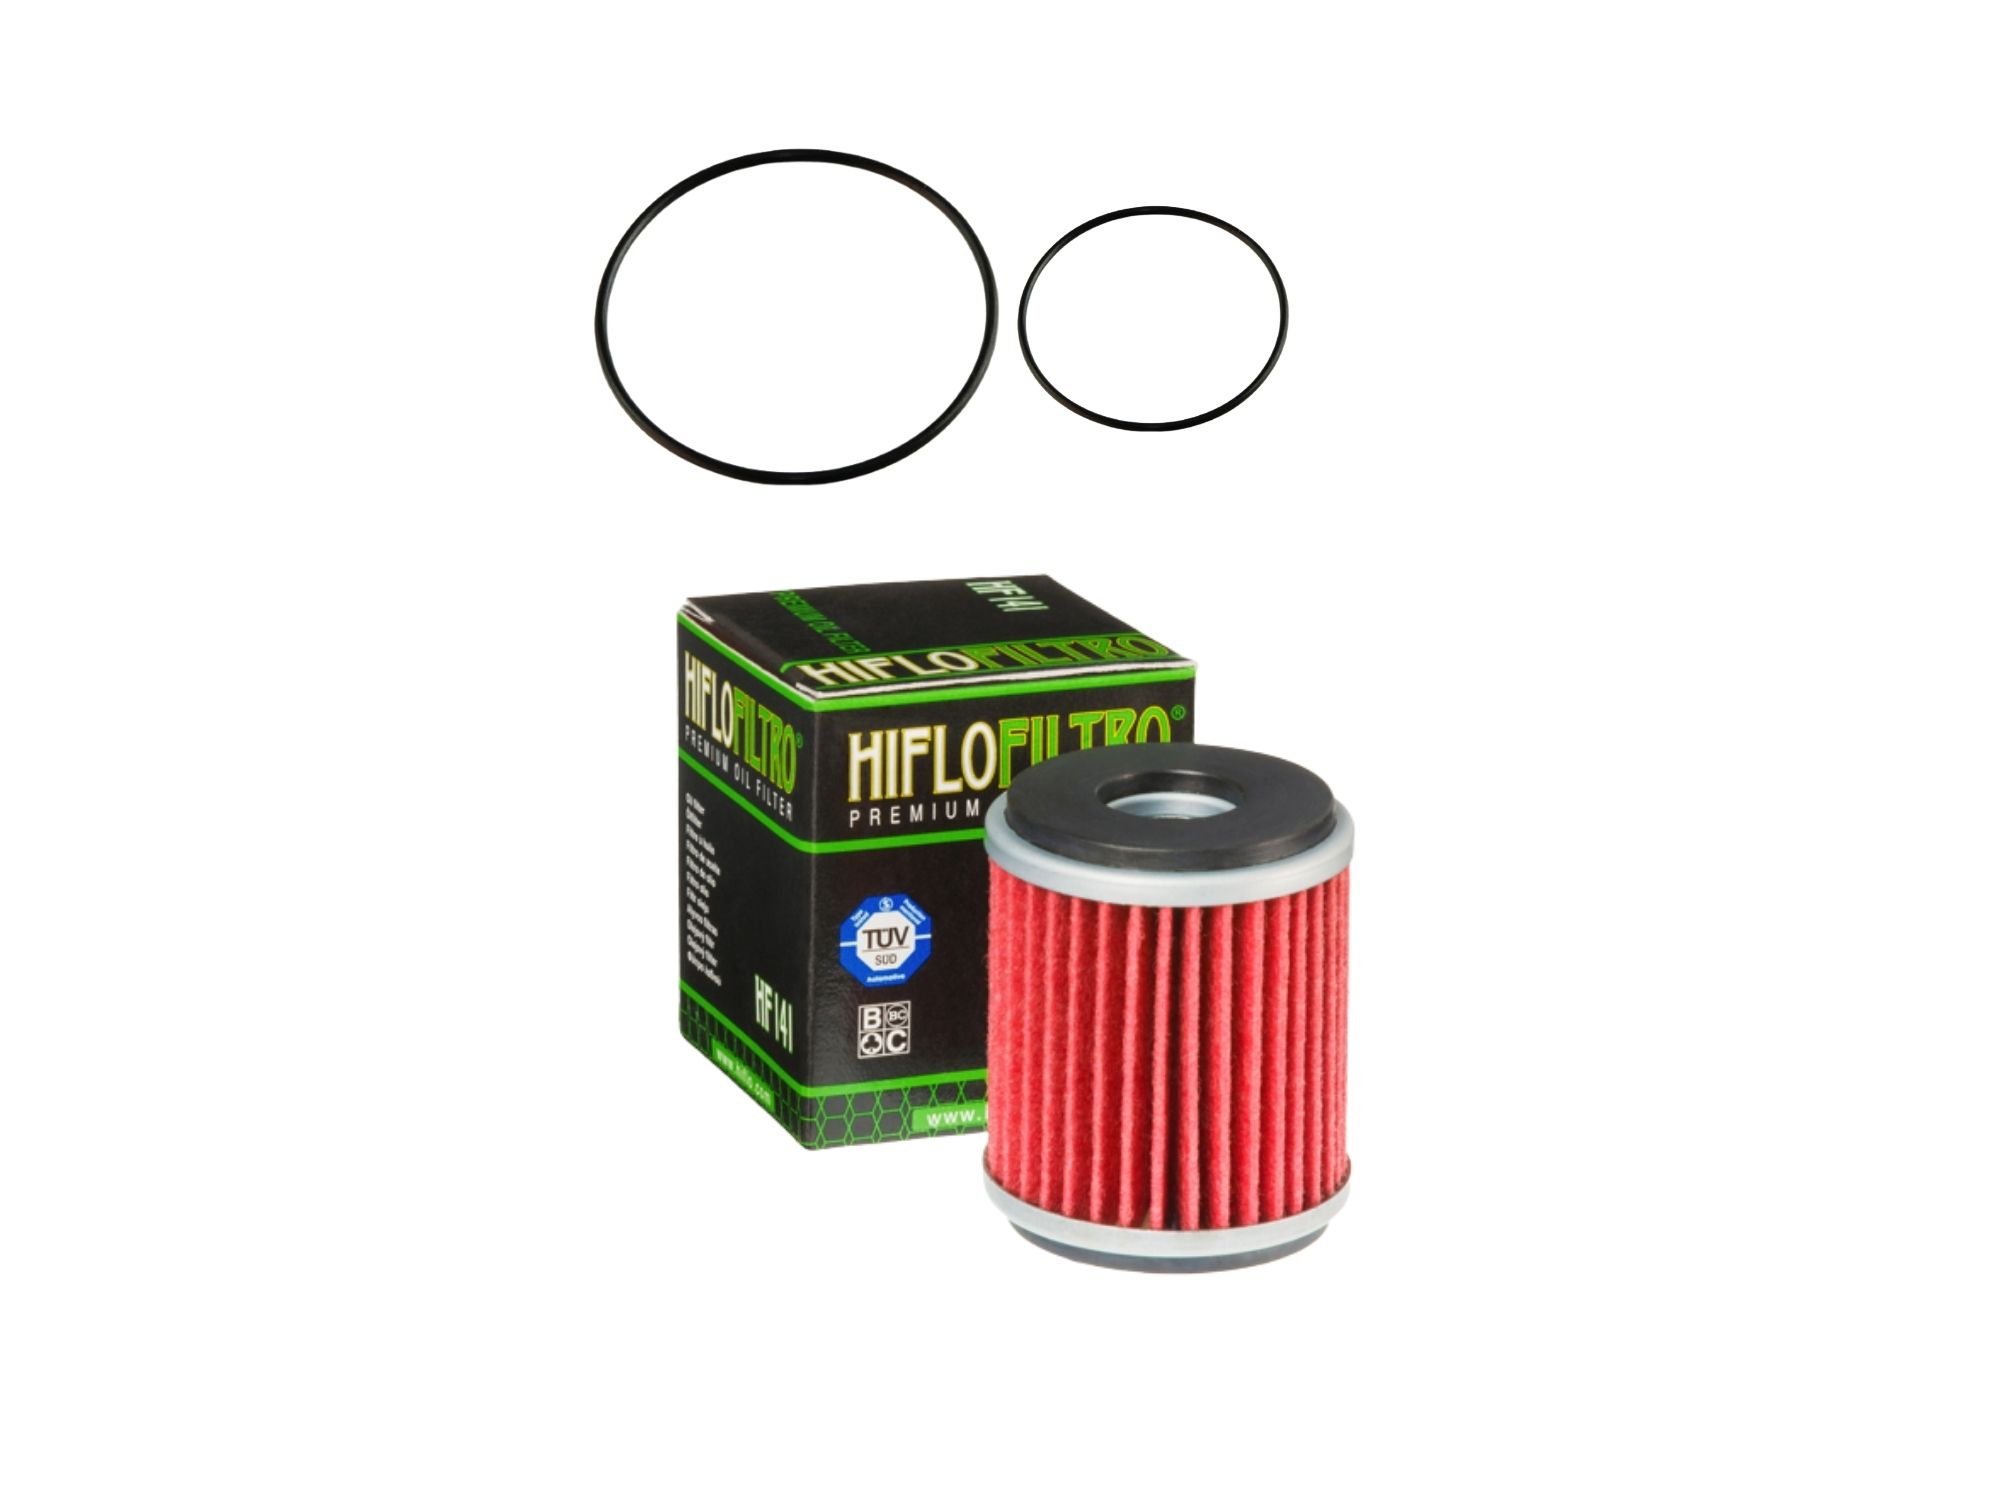 Oil filter kit suitable for Beta RR 125 LC Enduro Supermoto 11-23